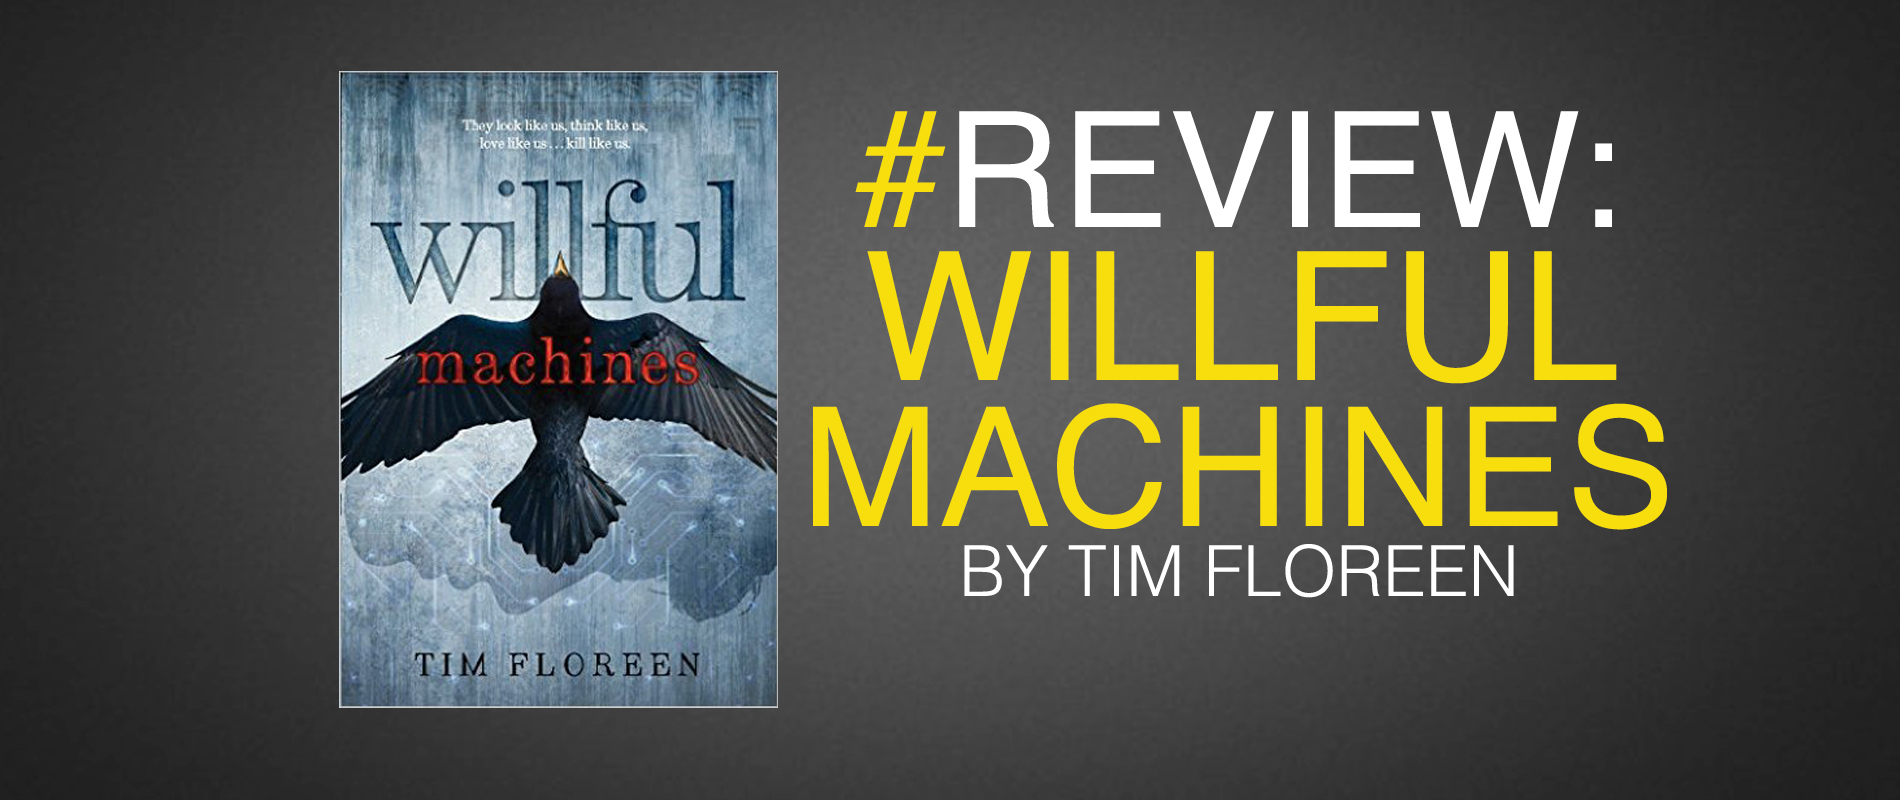 willful machines by tim floreen